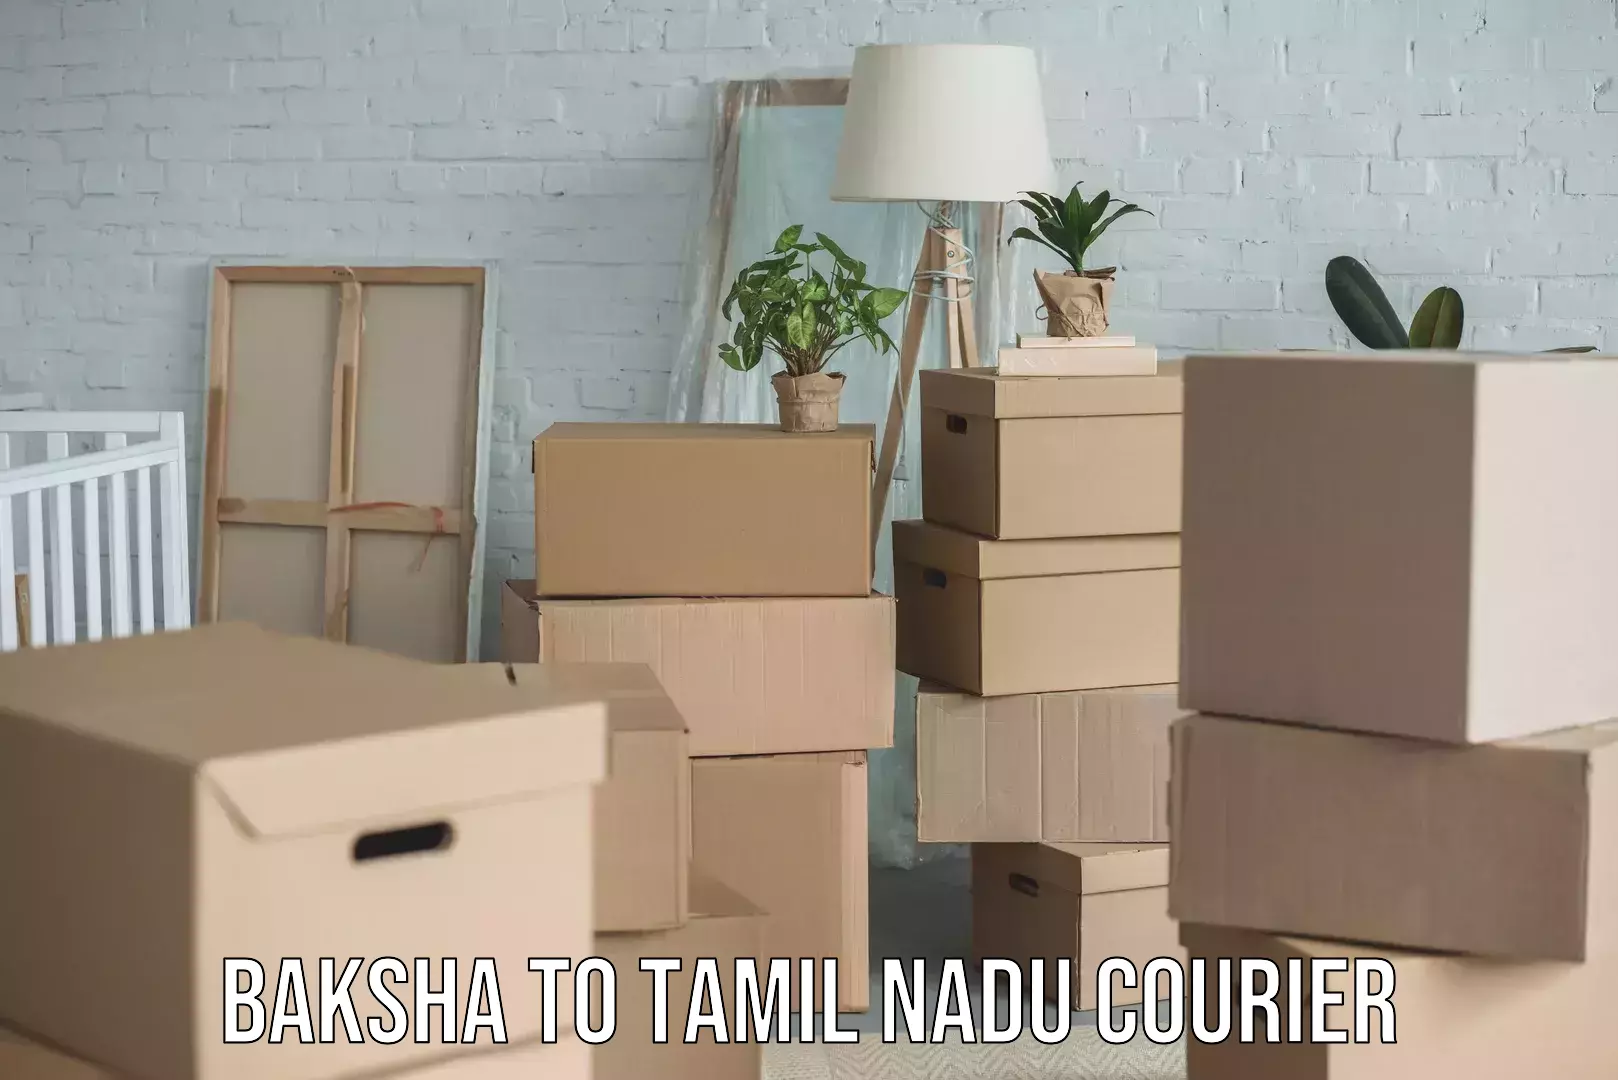 State-of-the-art courier technology Baksha to Tamil Nadu